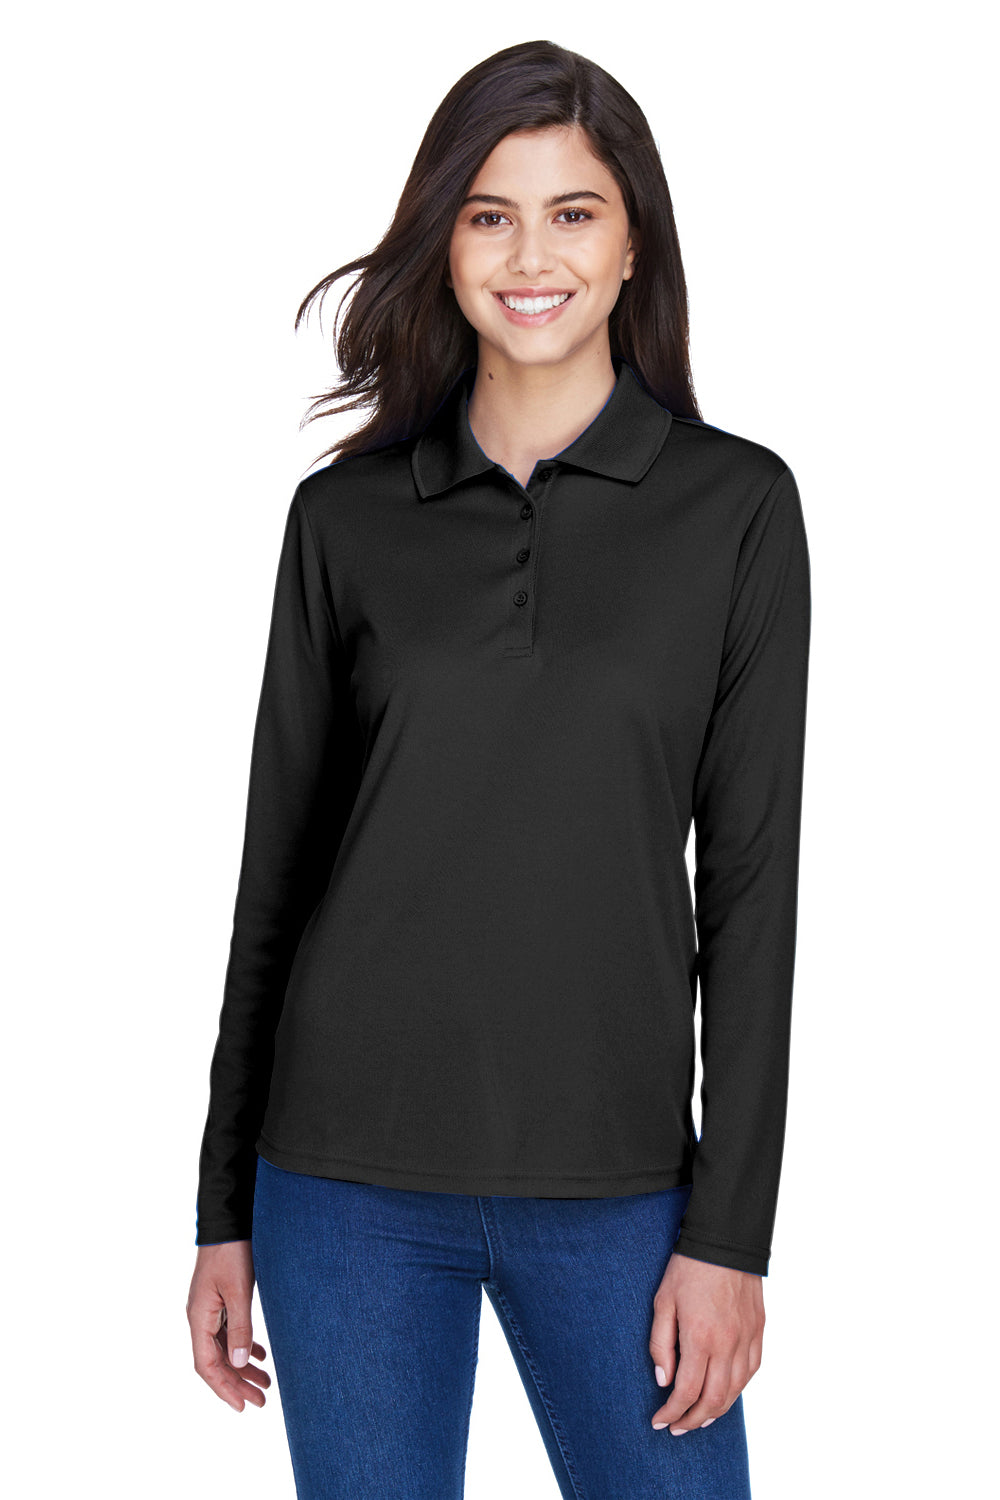 Core 365 78192 Womens Pinnacle Performance Moisture Wicking Long Sleeve Polo Shirt Black Front